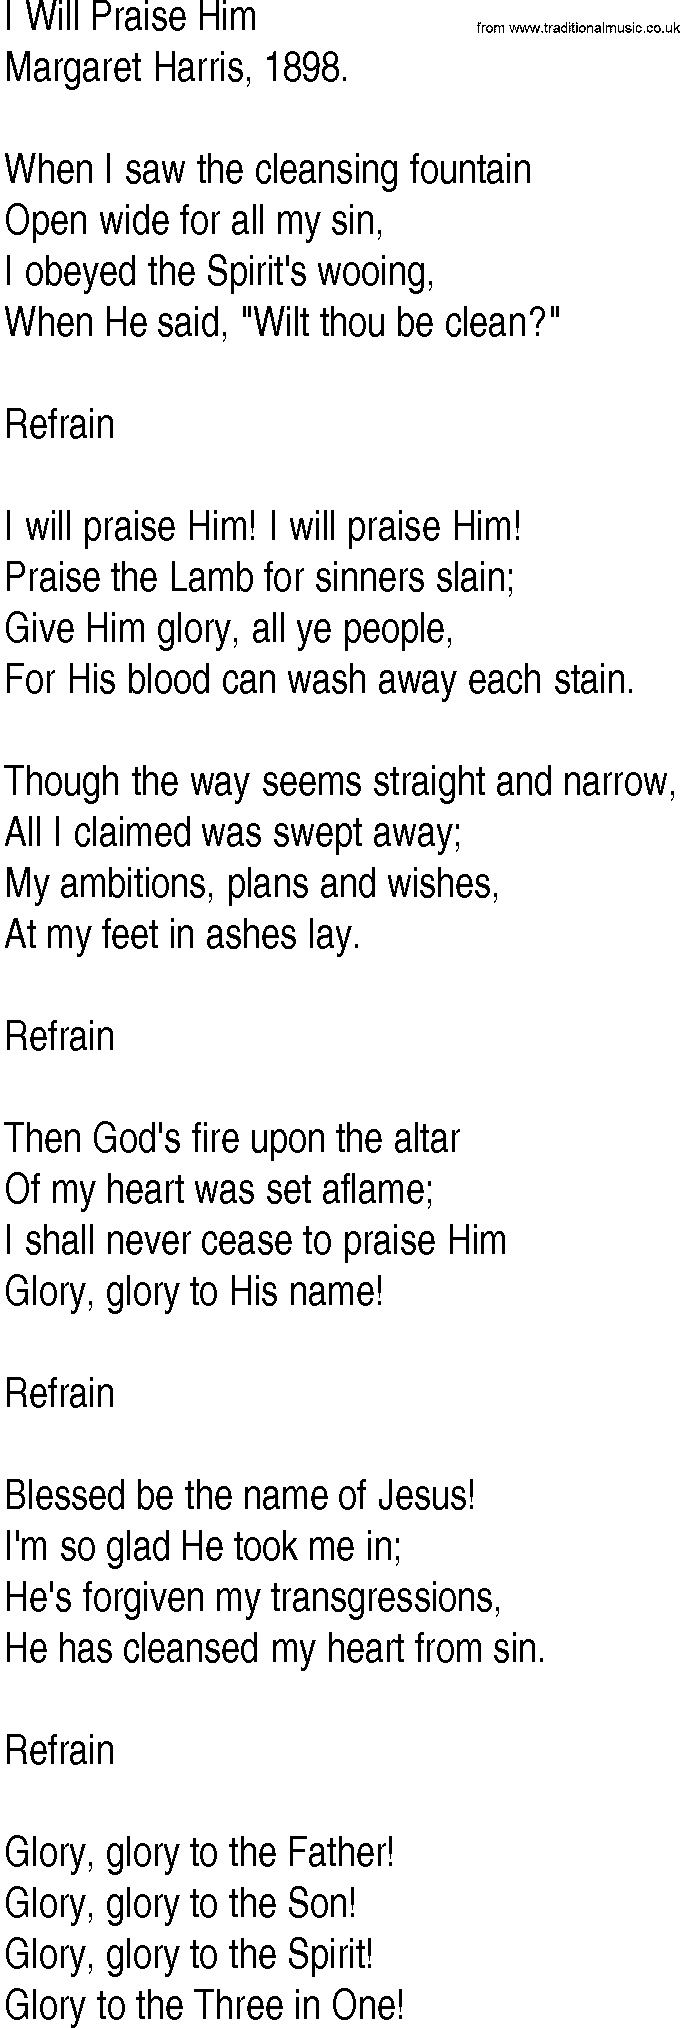 Hymn and Gospel Song: I Will Praise Him by Margaret Harris lyrics